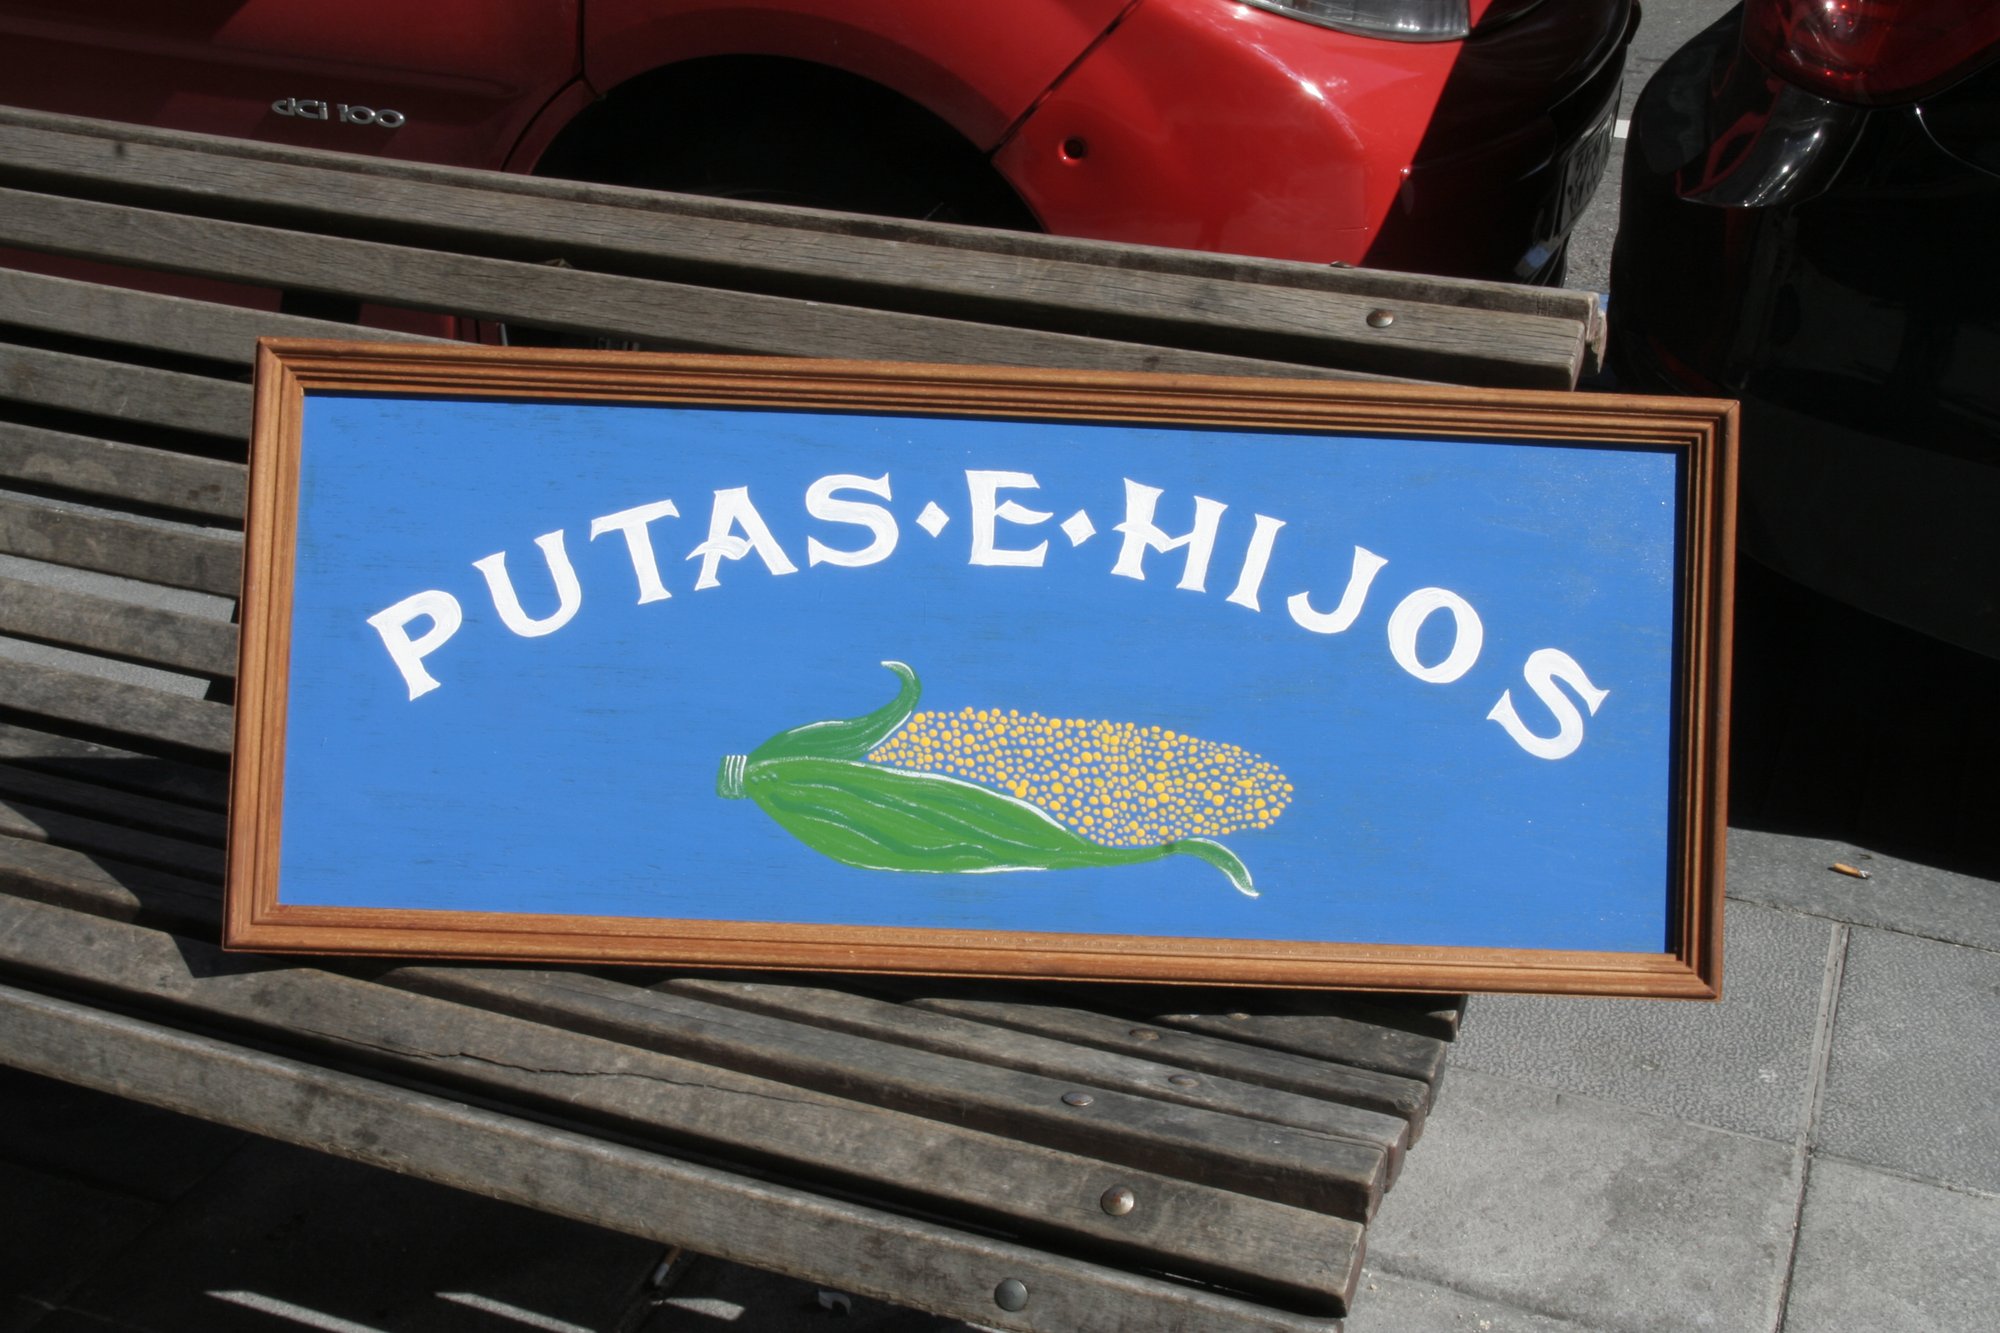 Image of Putas E Hijos